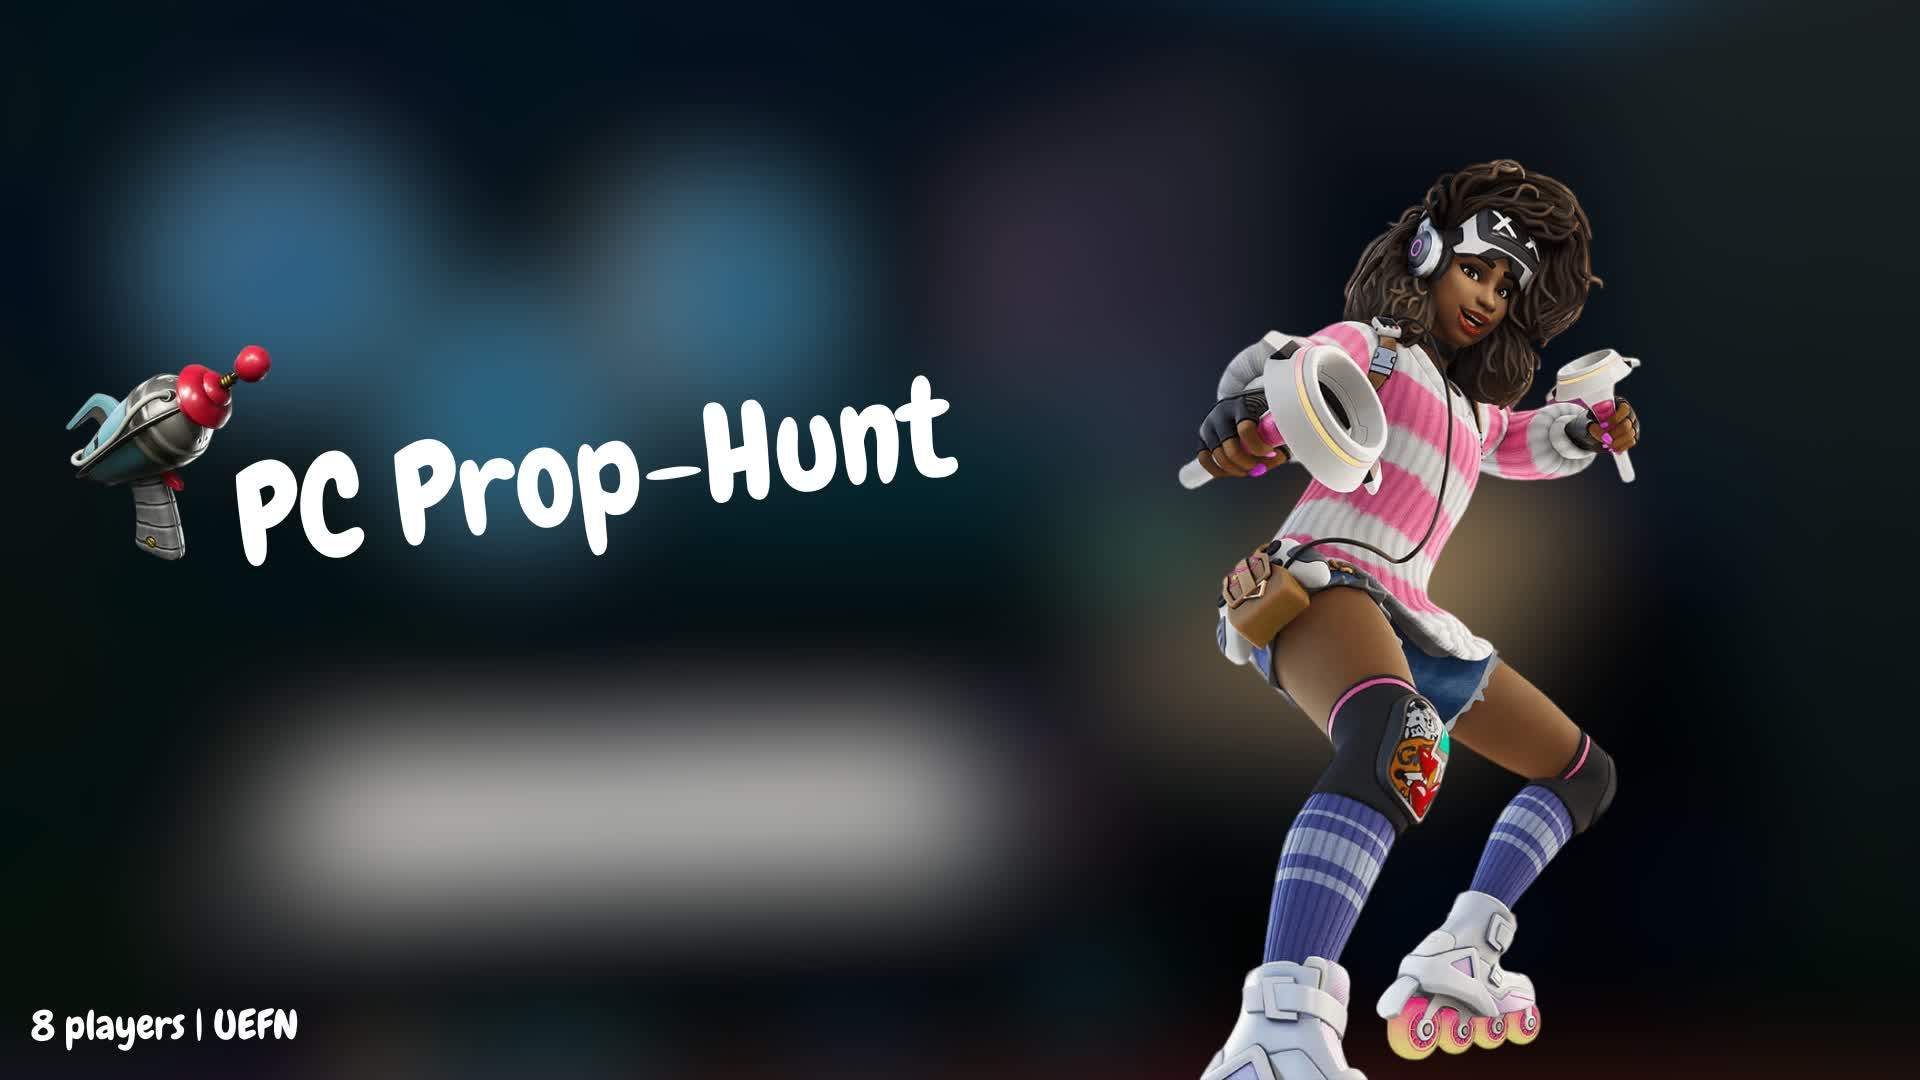 PC Prop-Hunt